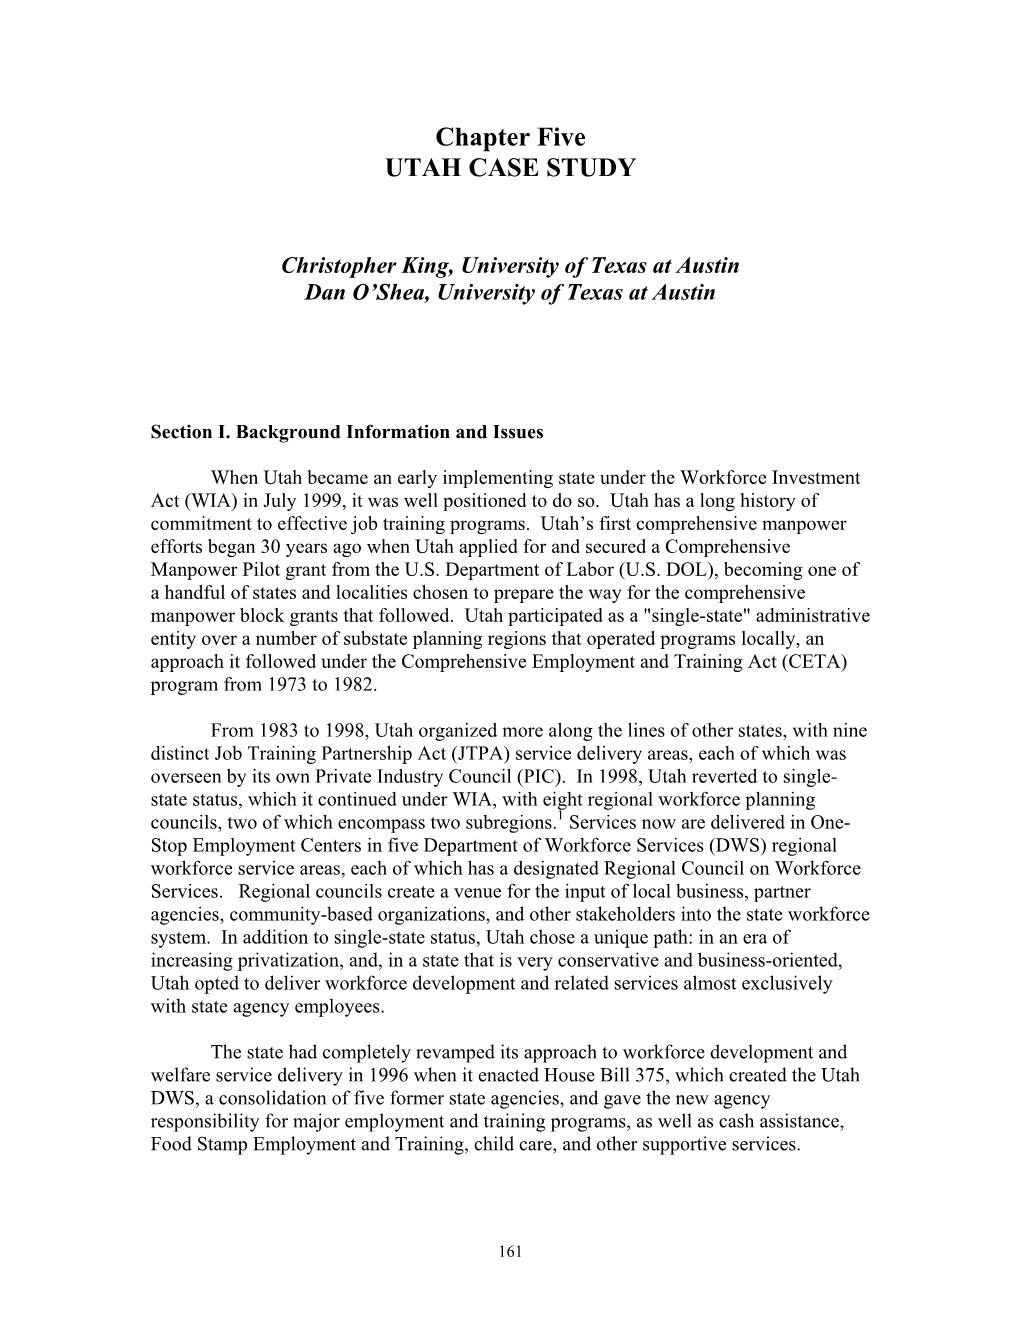 Chapter Five: Utah Case Study